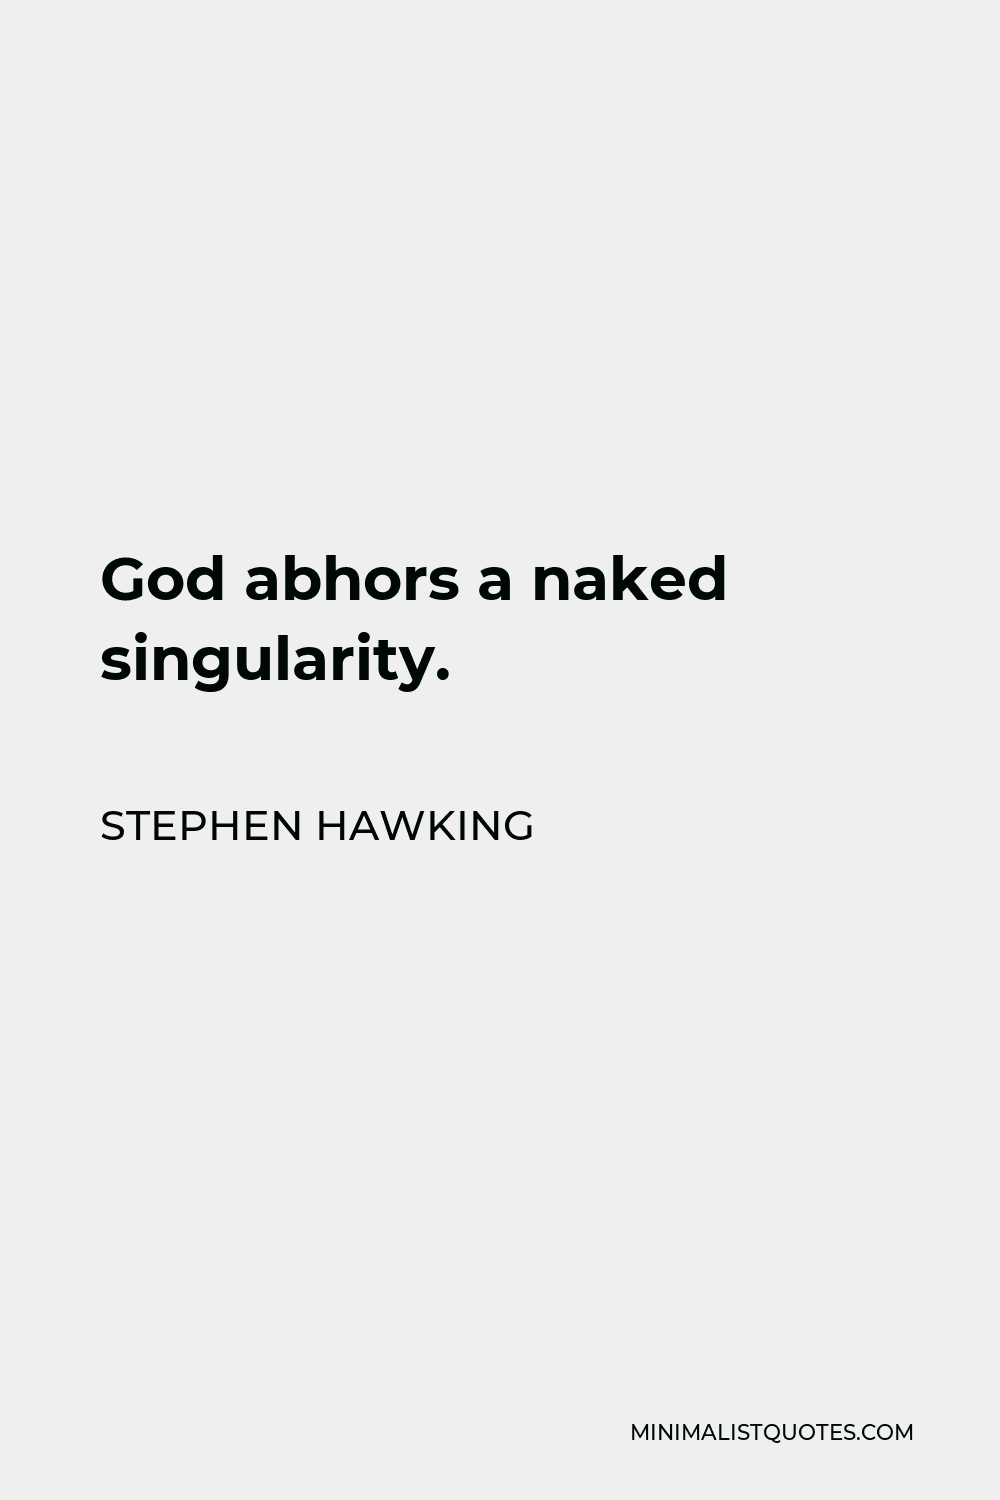 Stephen Hawking Quote - God abhors a naked singularity.